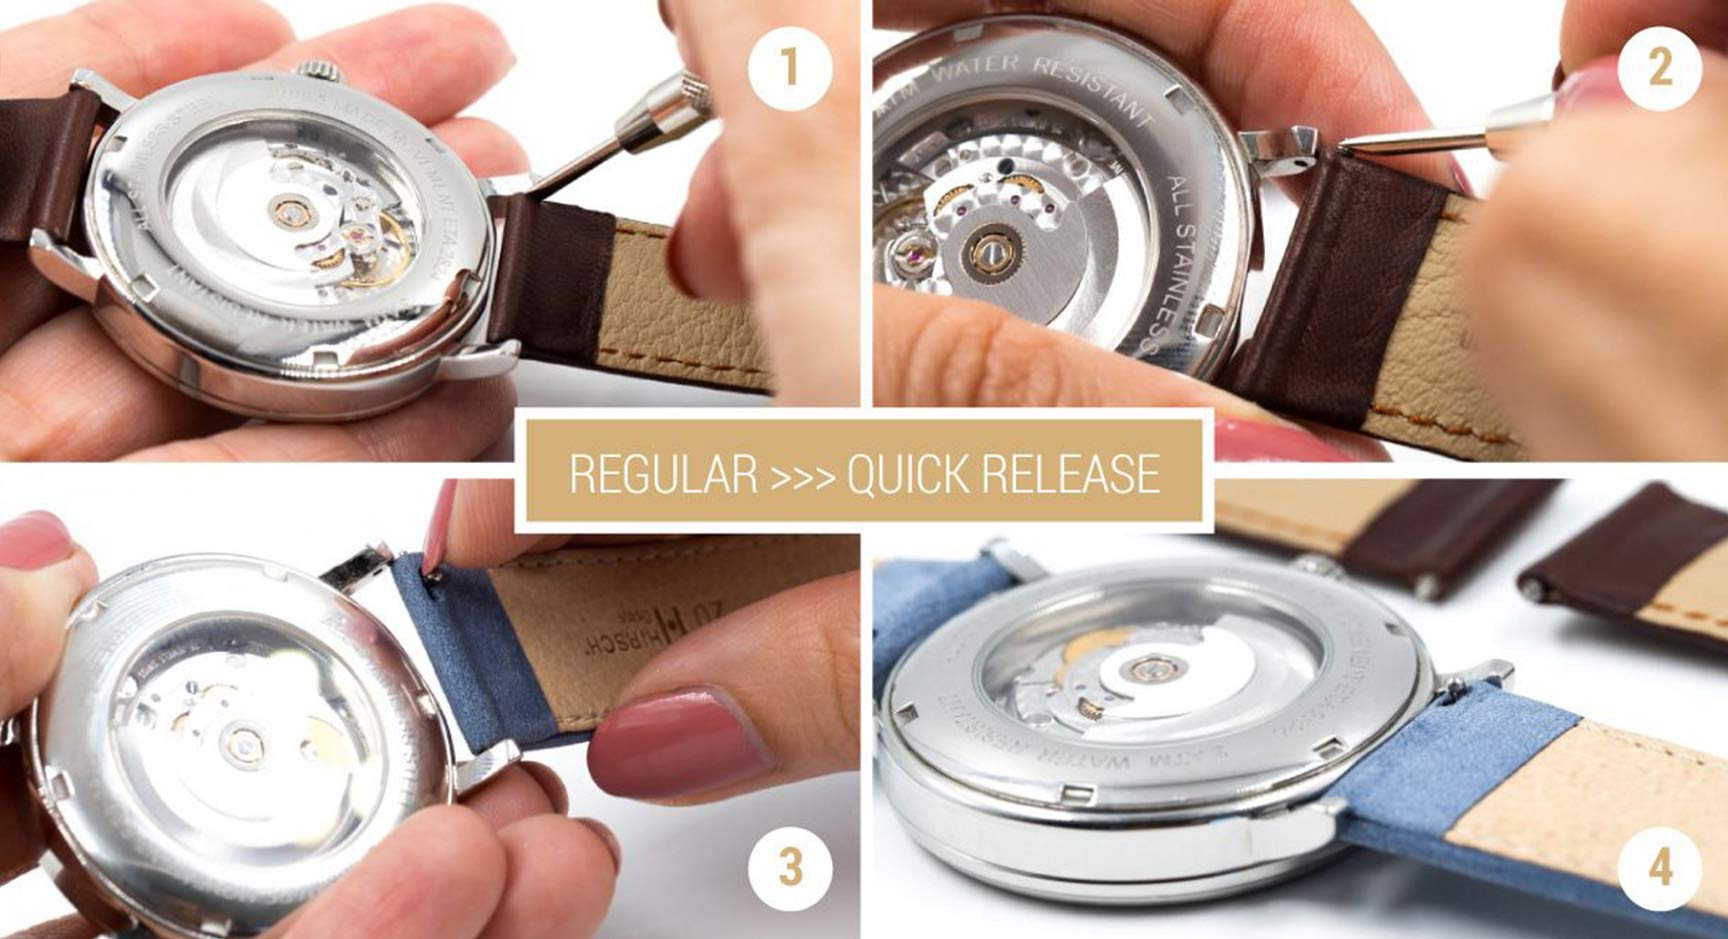 Hirsch Pure Premium Caoutchouc Watch Strap - 100% Natural Rubber - 18mm, 20mm, 22mm-26mm - Choose Color & Size - Quick Release Watch Band